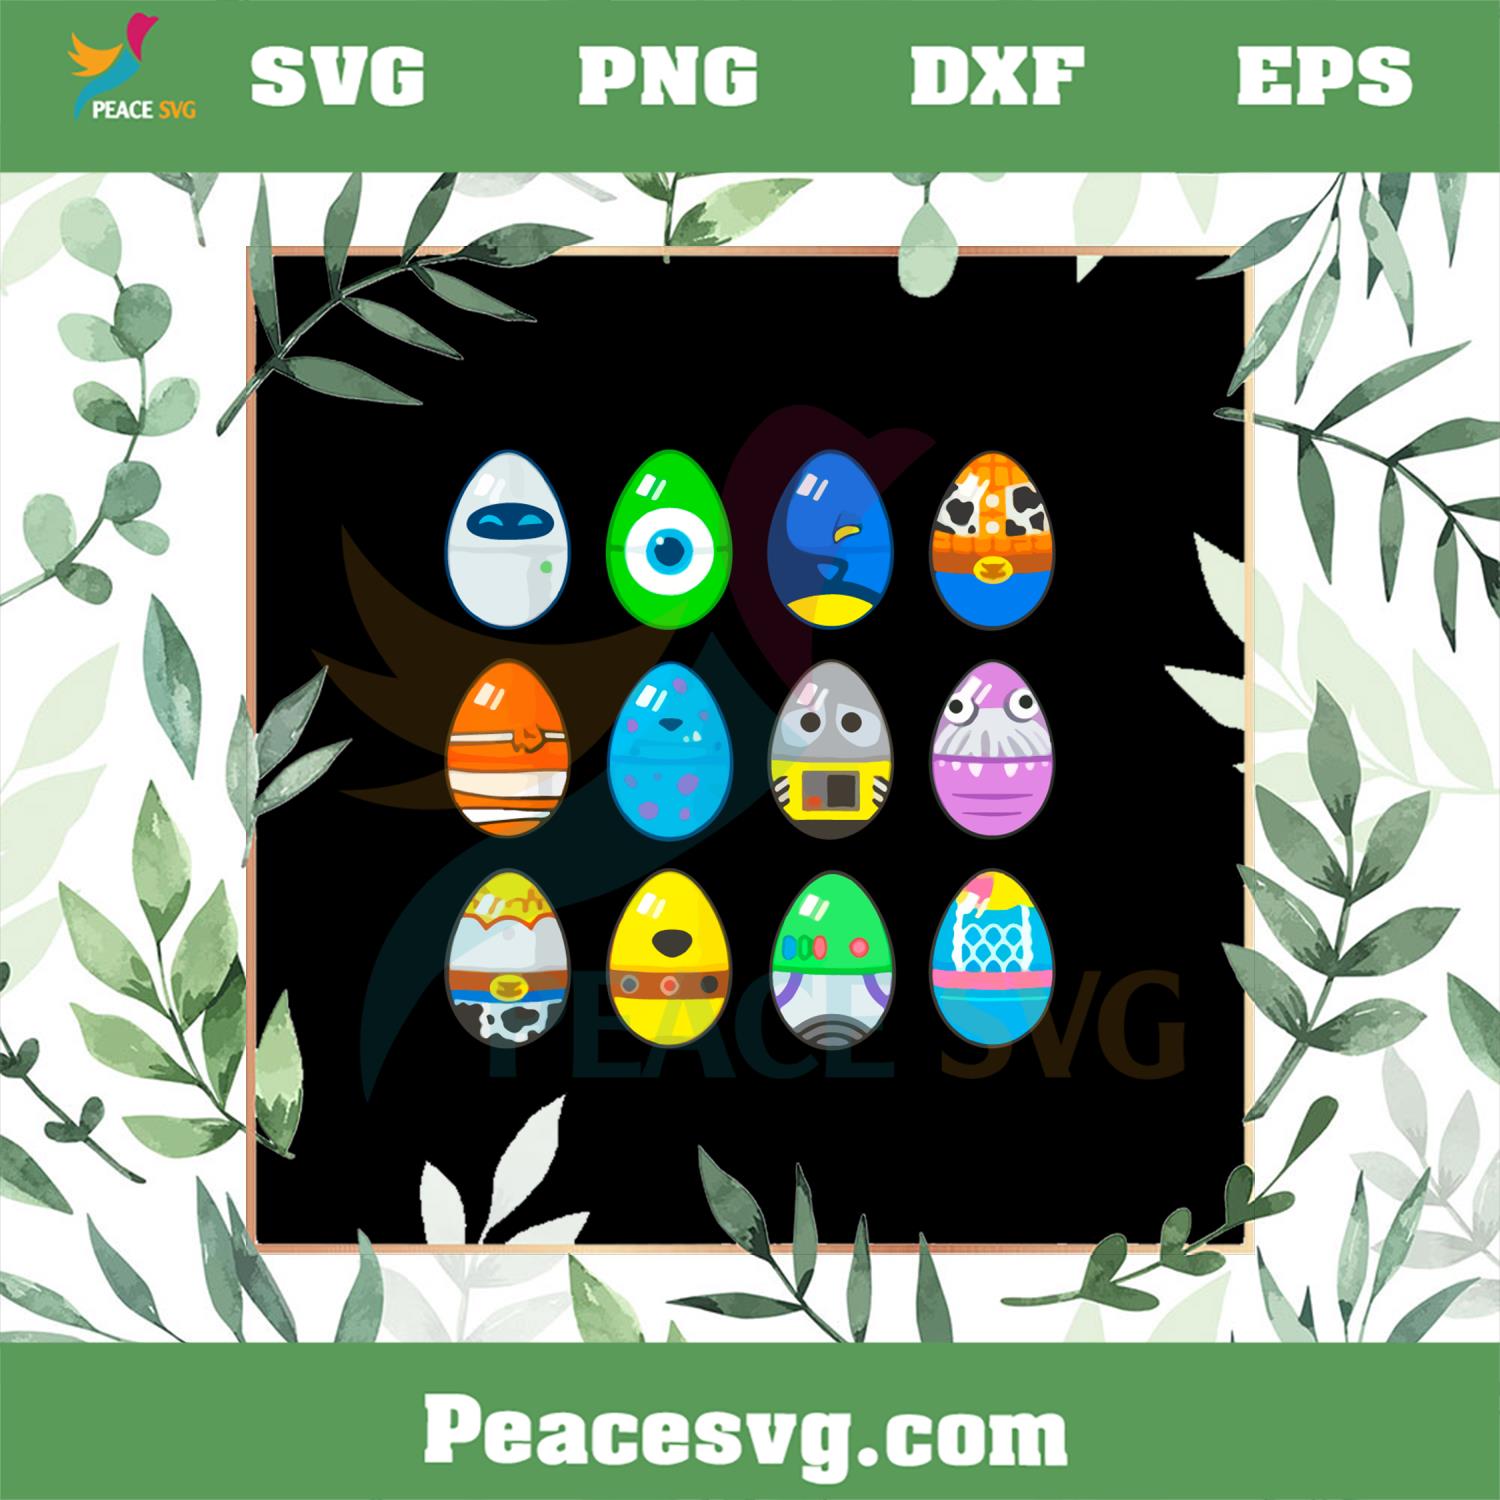 Pixar Classic Characters Easter Eggs SVG Cutting Digital Files